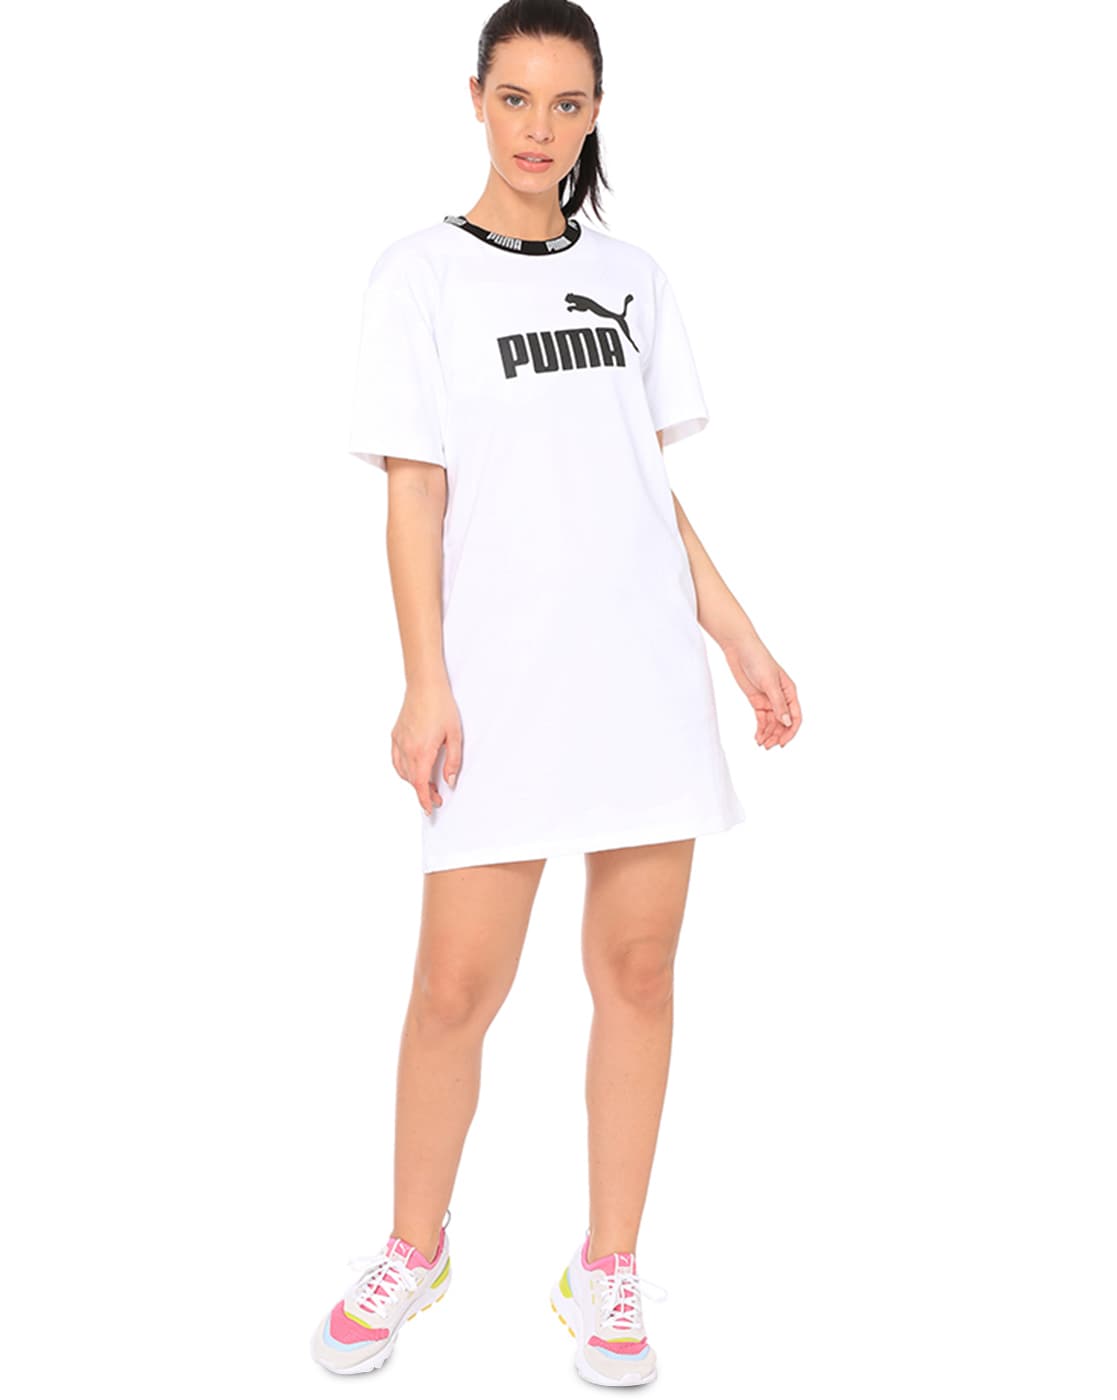 white tennis dress